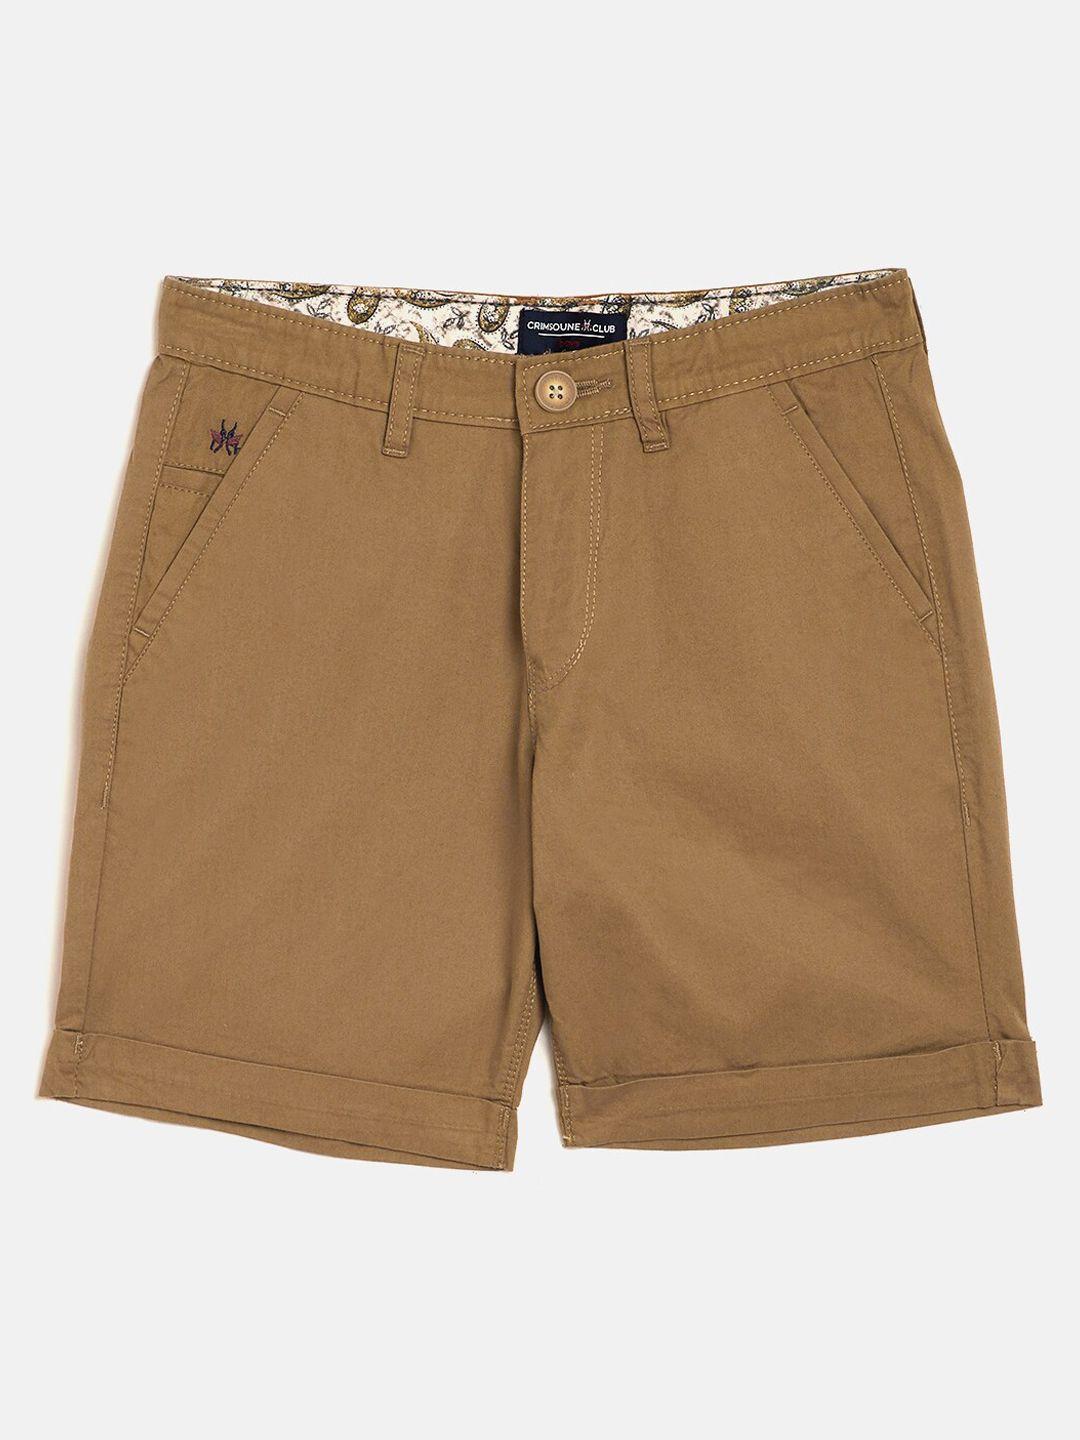 crimsoune club boys khaki brown solid slim fit regular shorts